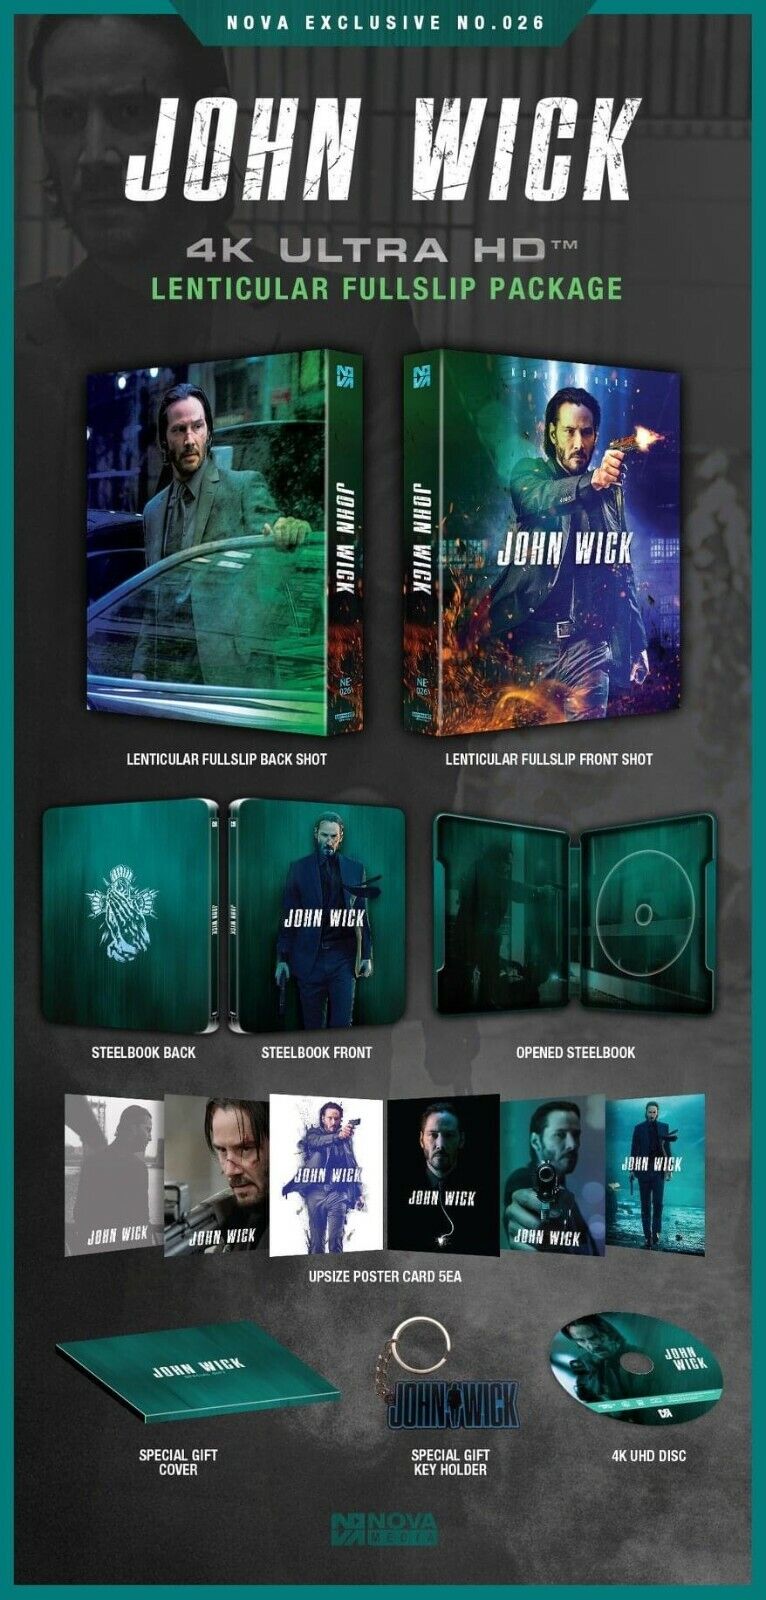 John Wick 4K Blu-ray Steelbook Novamedia Exclusive #26 Lenticular Slip